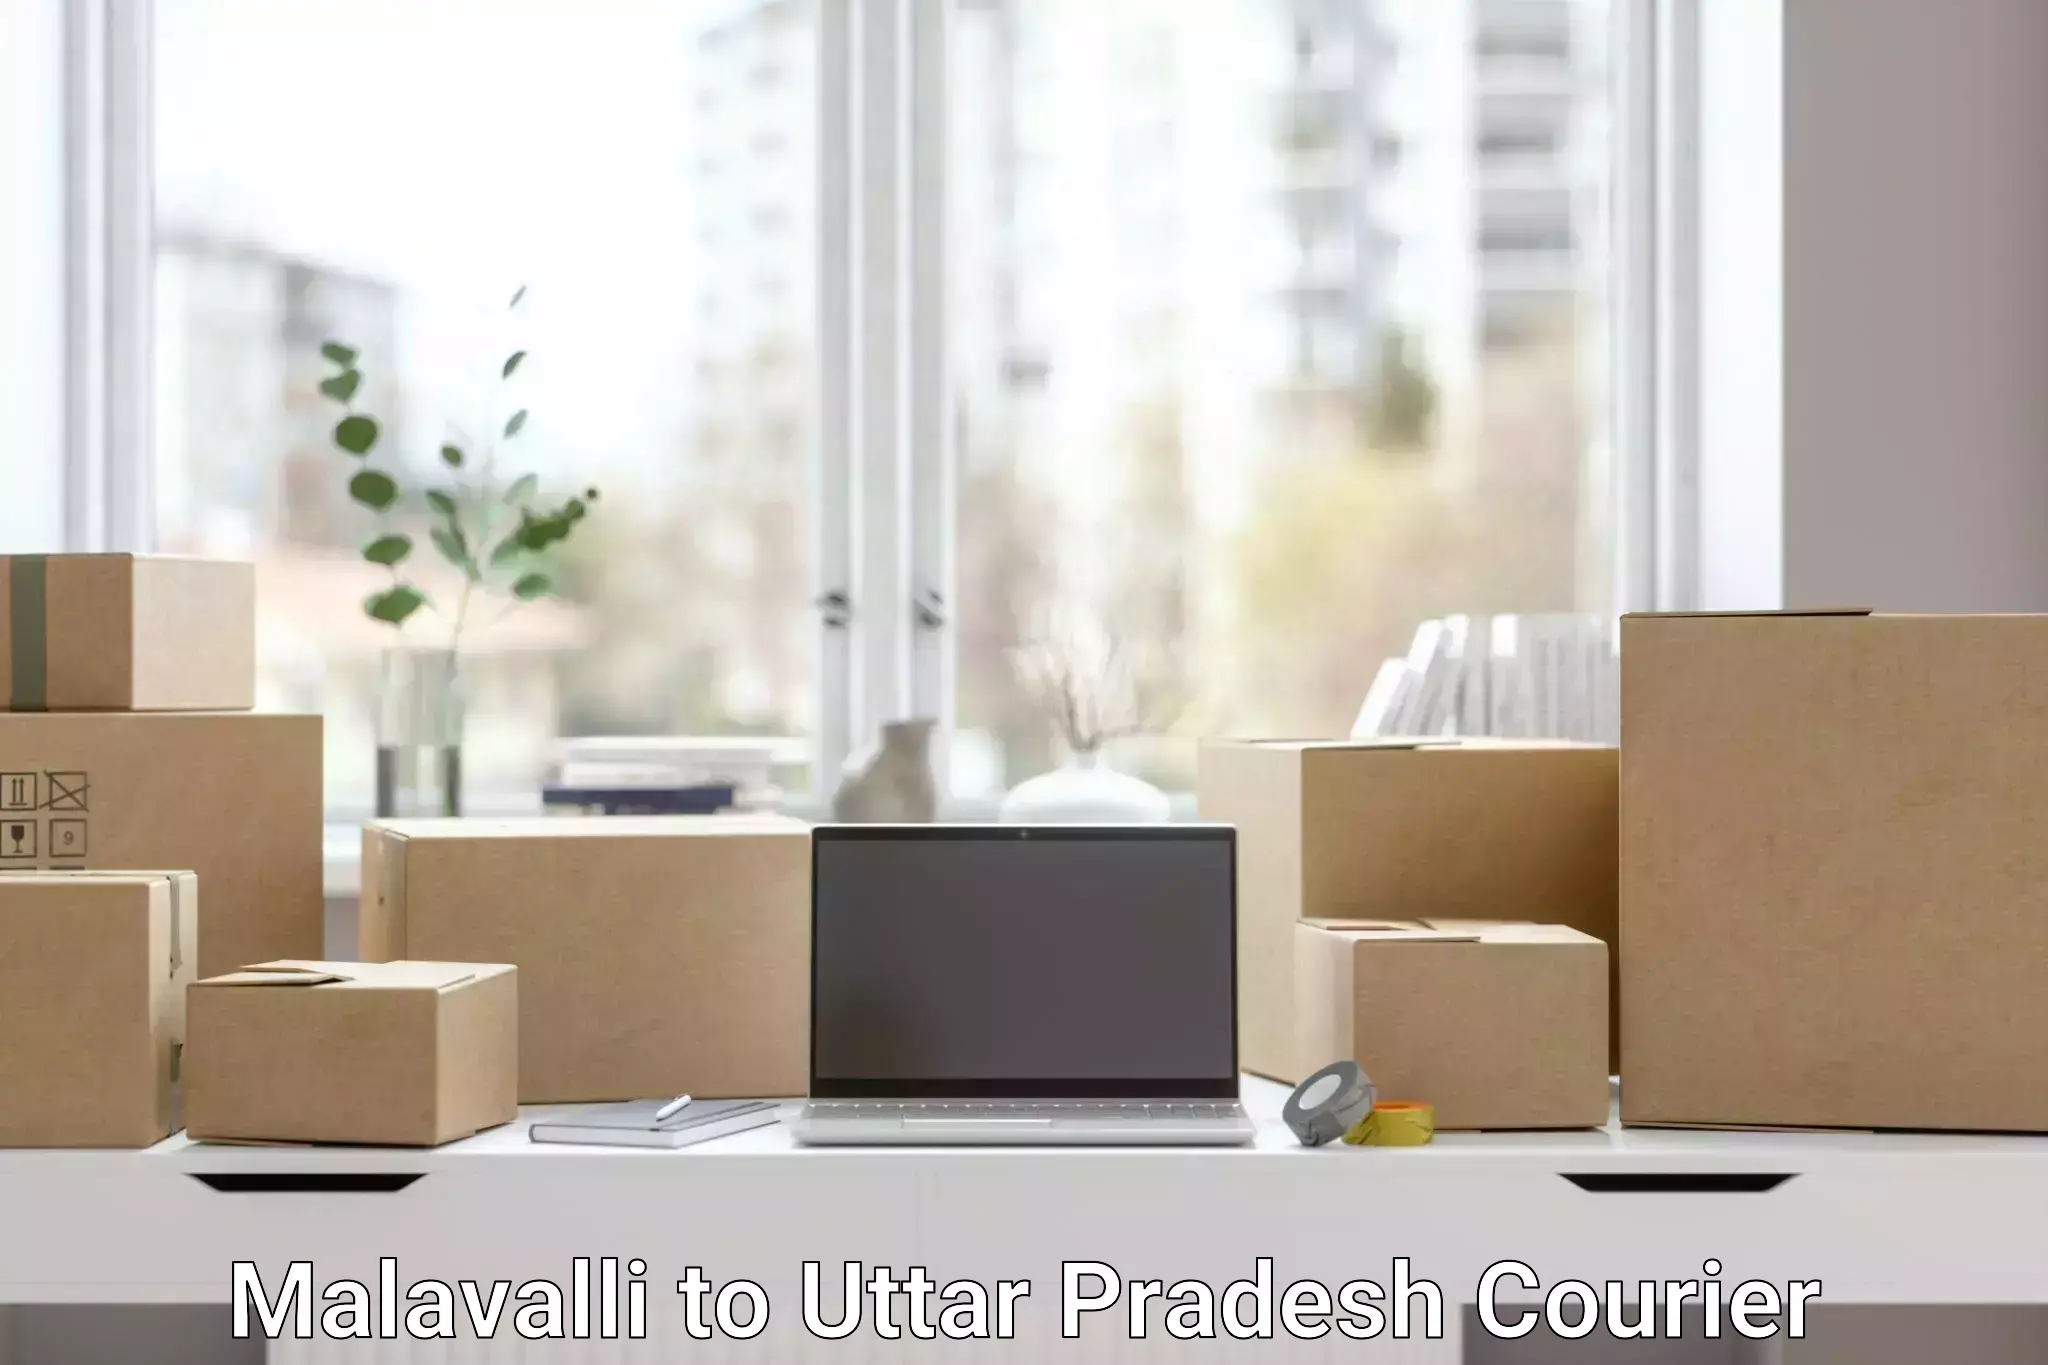 Reliable shipping partners Malavalli to Uttar Pradesh